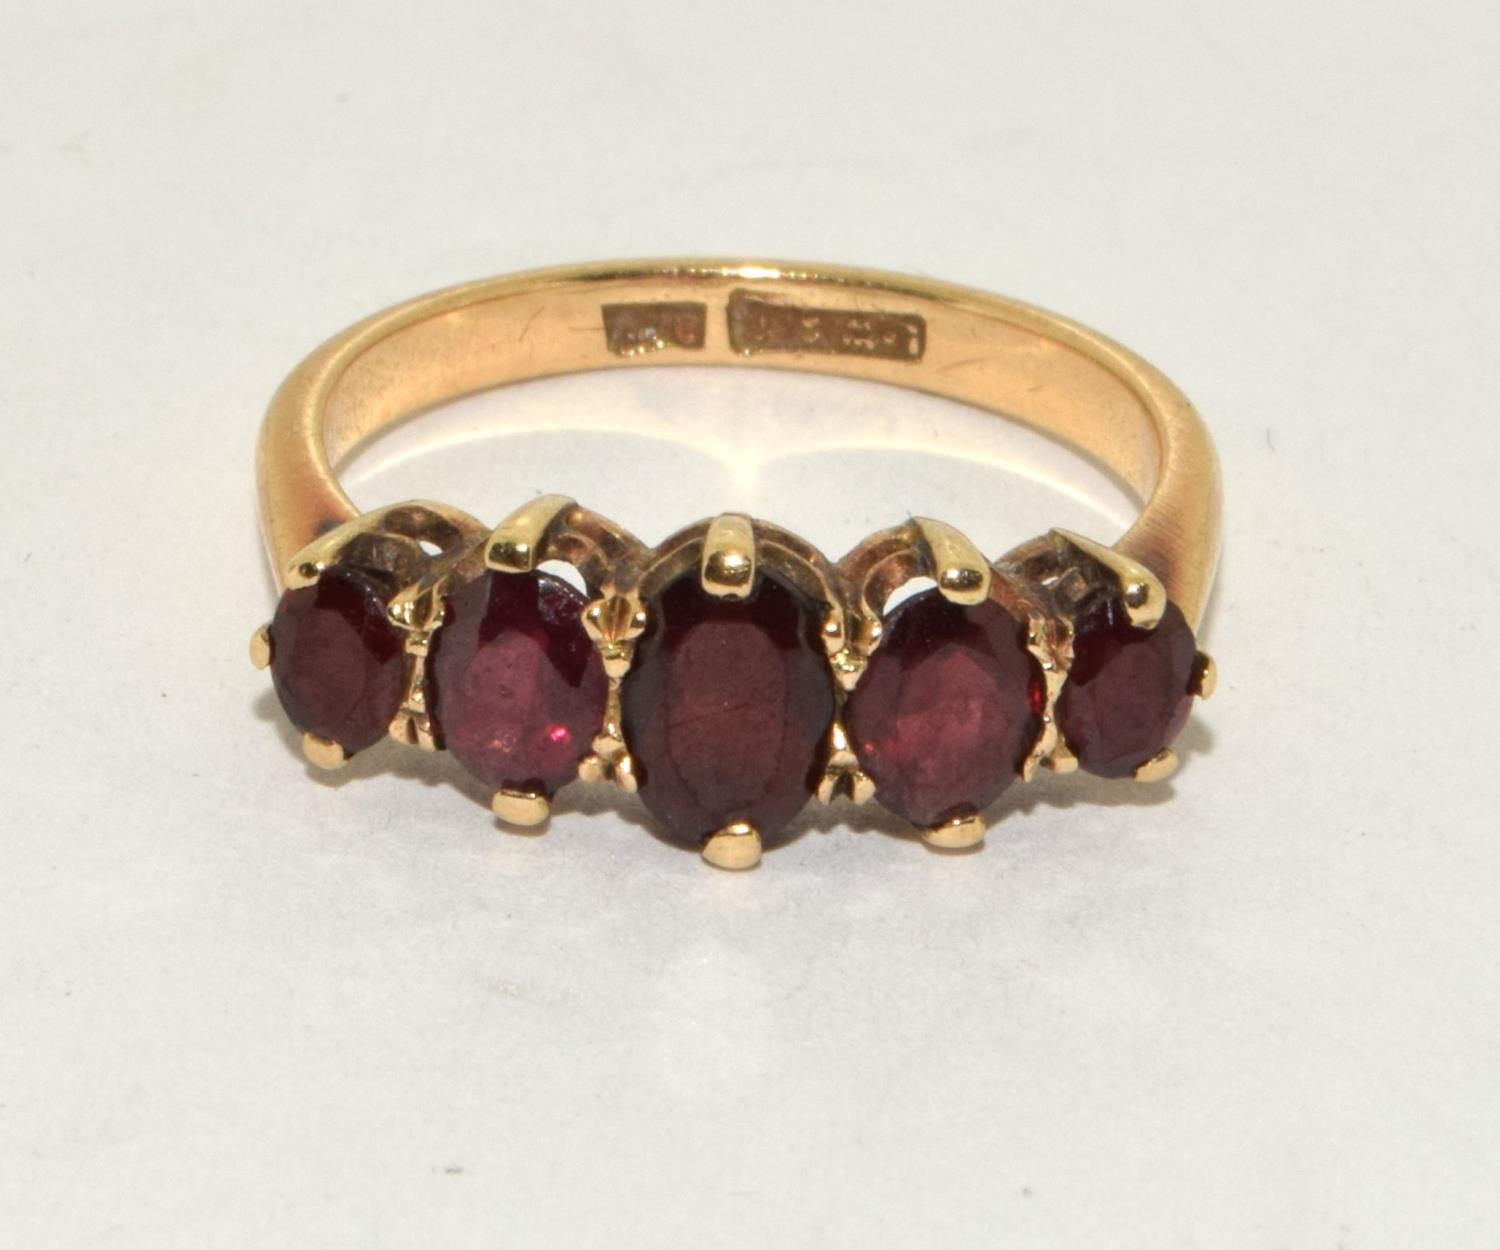 9ct gold antique set 5 stone garnet ring 3g size N - Image 5 of 5